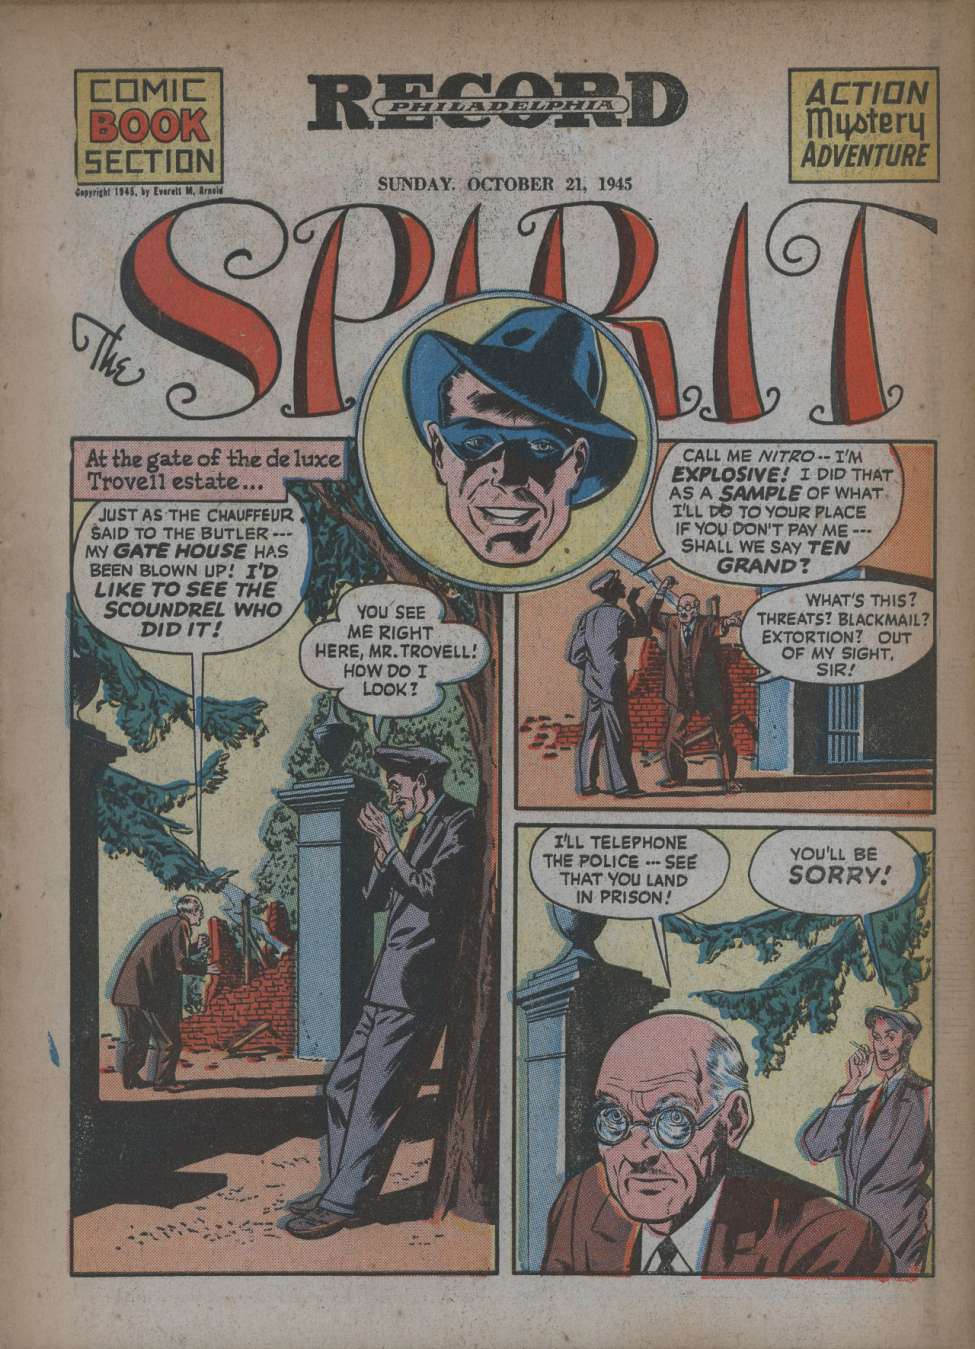 Comic Book Cover For The Spirit (1945-10-21) - Philadelphia Record